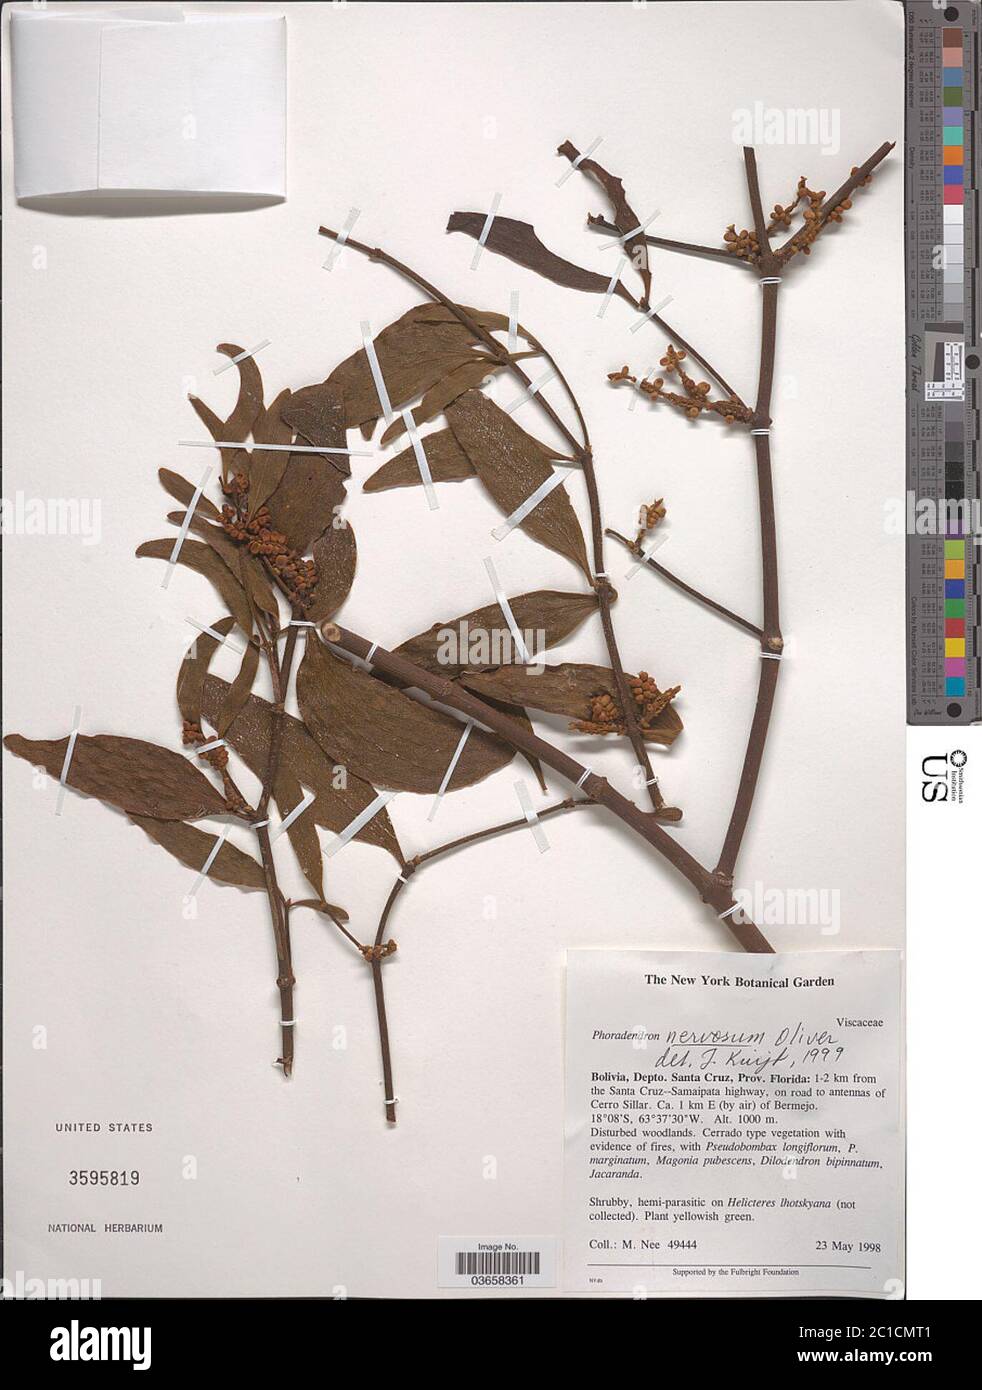 Phoradendron nervosum Oliv Phoradendron nervosum Oliv. Stock Photo